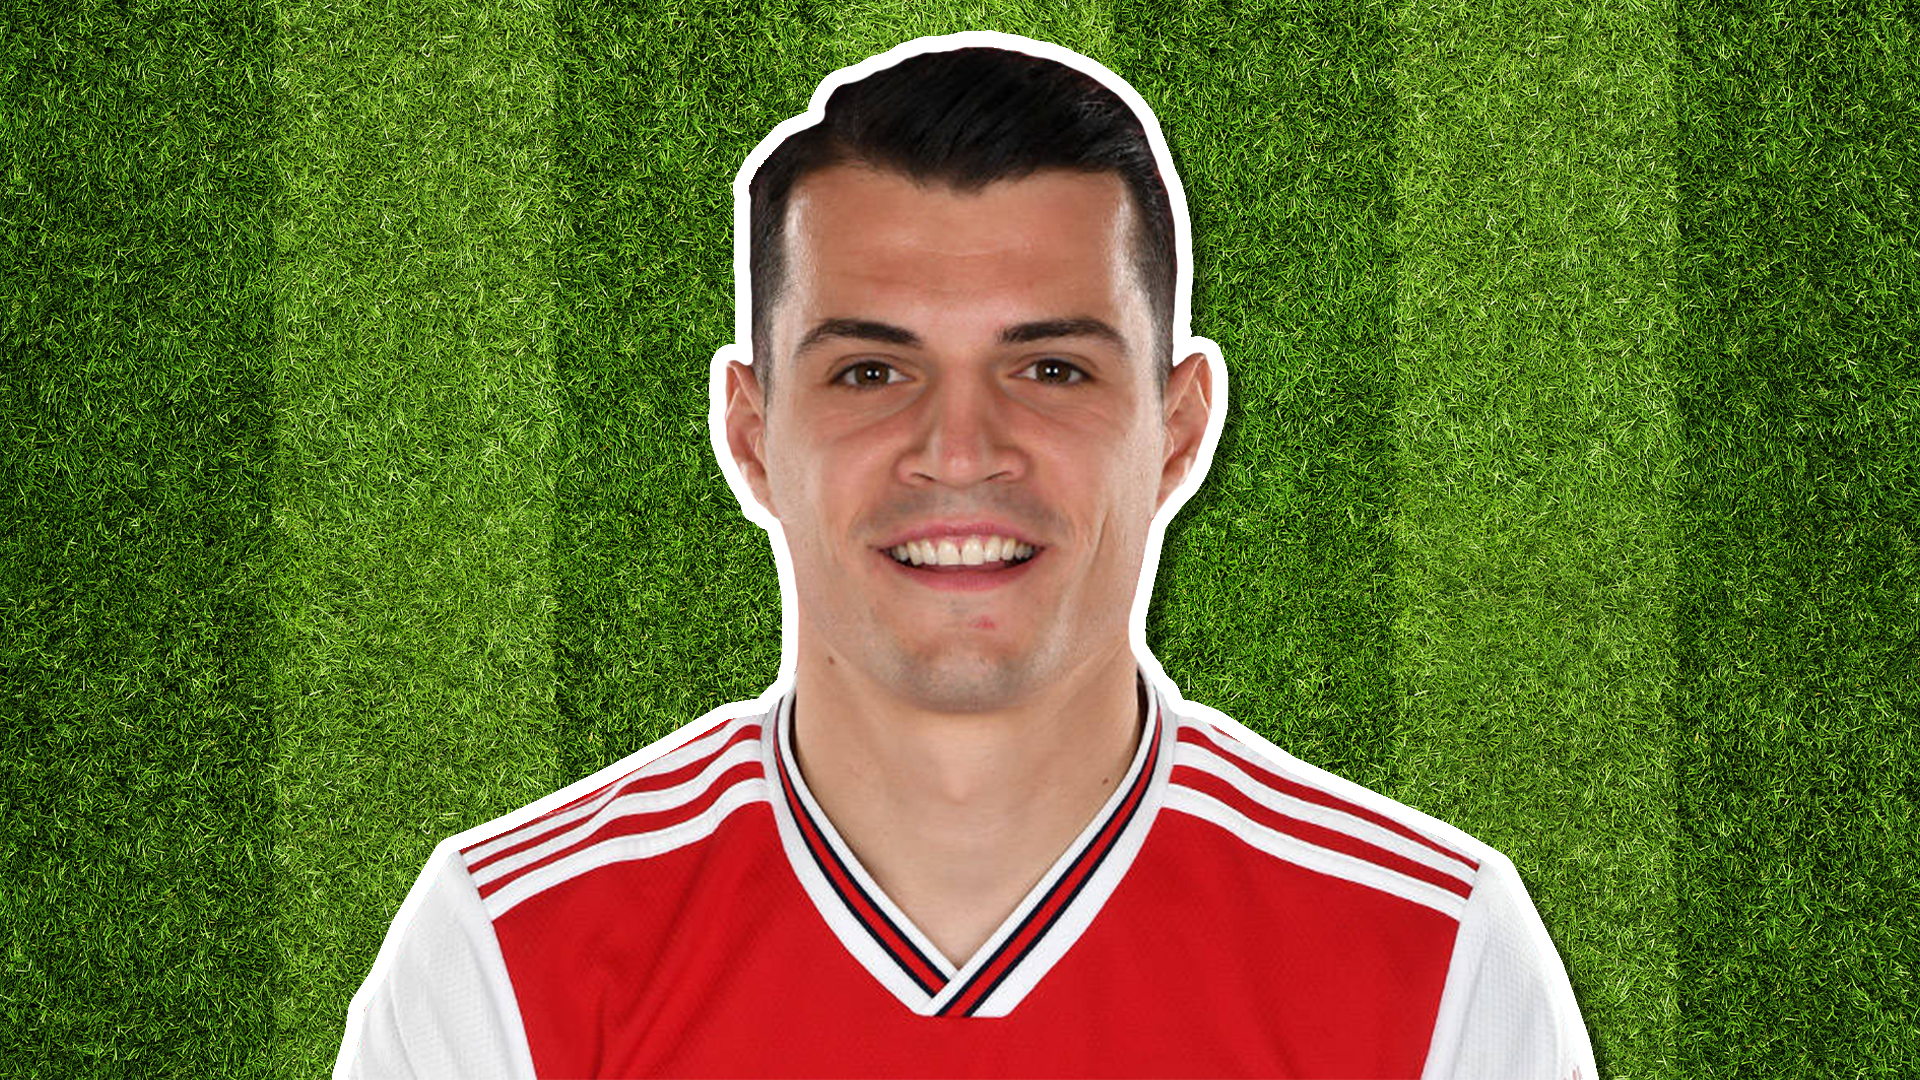 Arsenal player Granit Xhaka